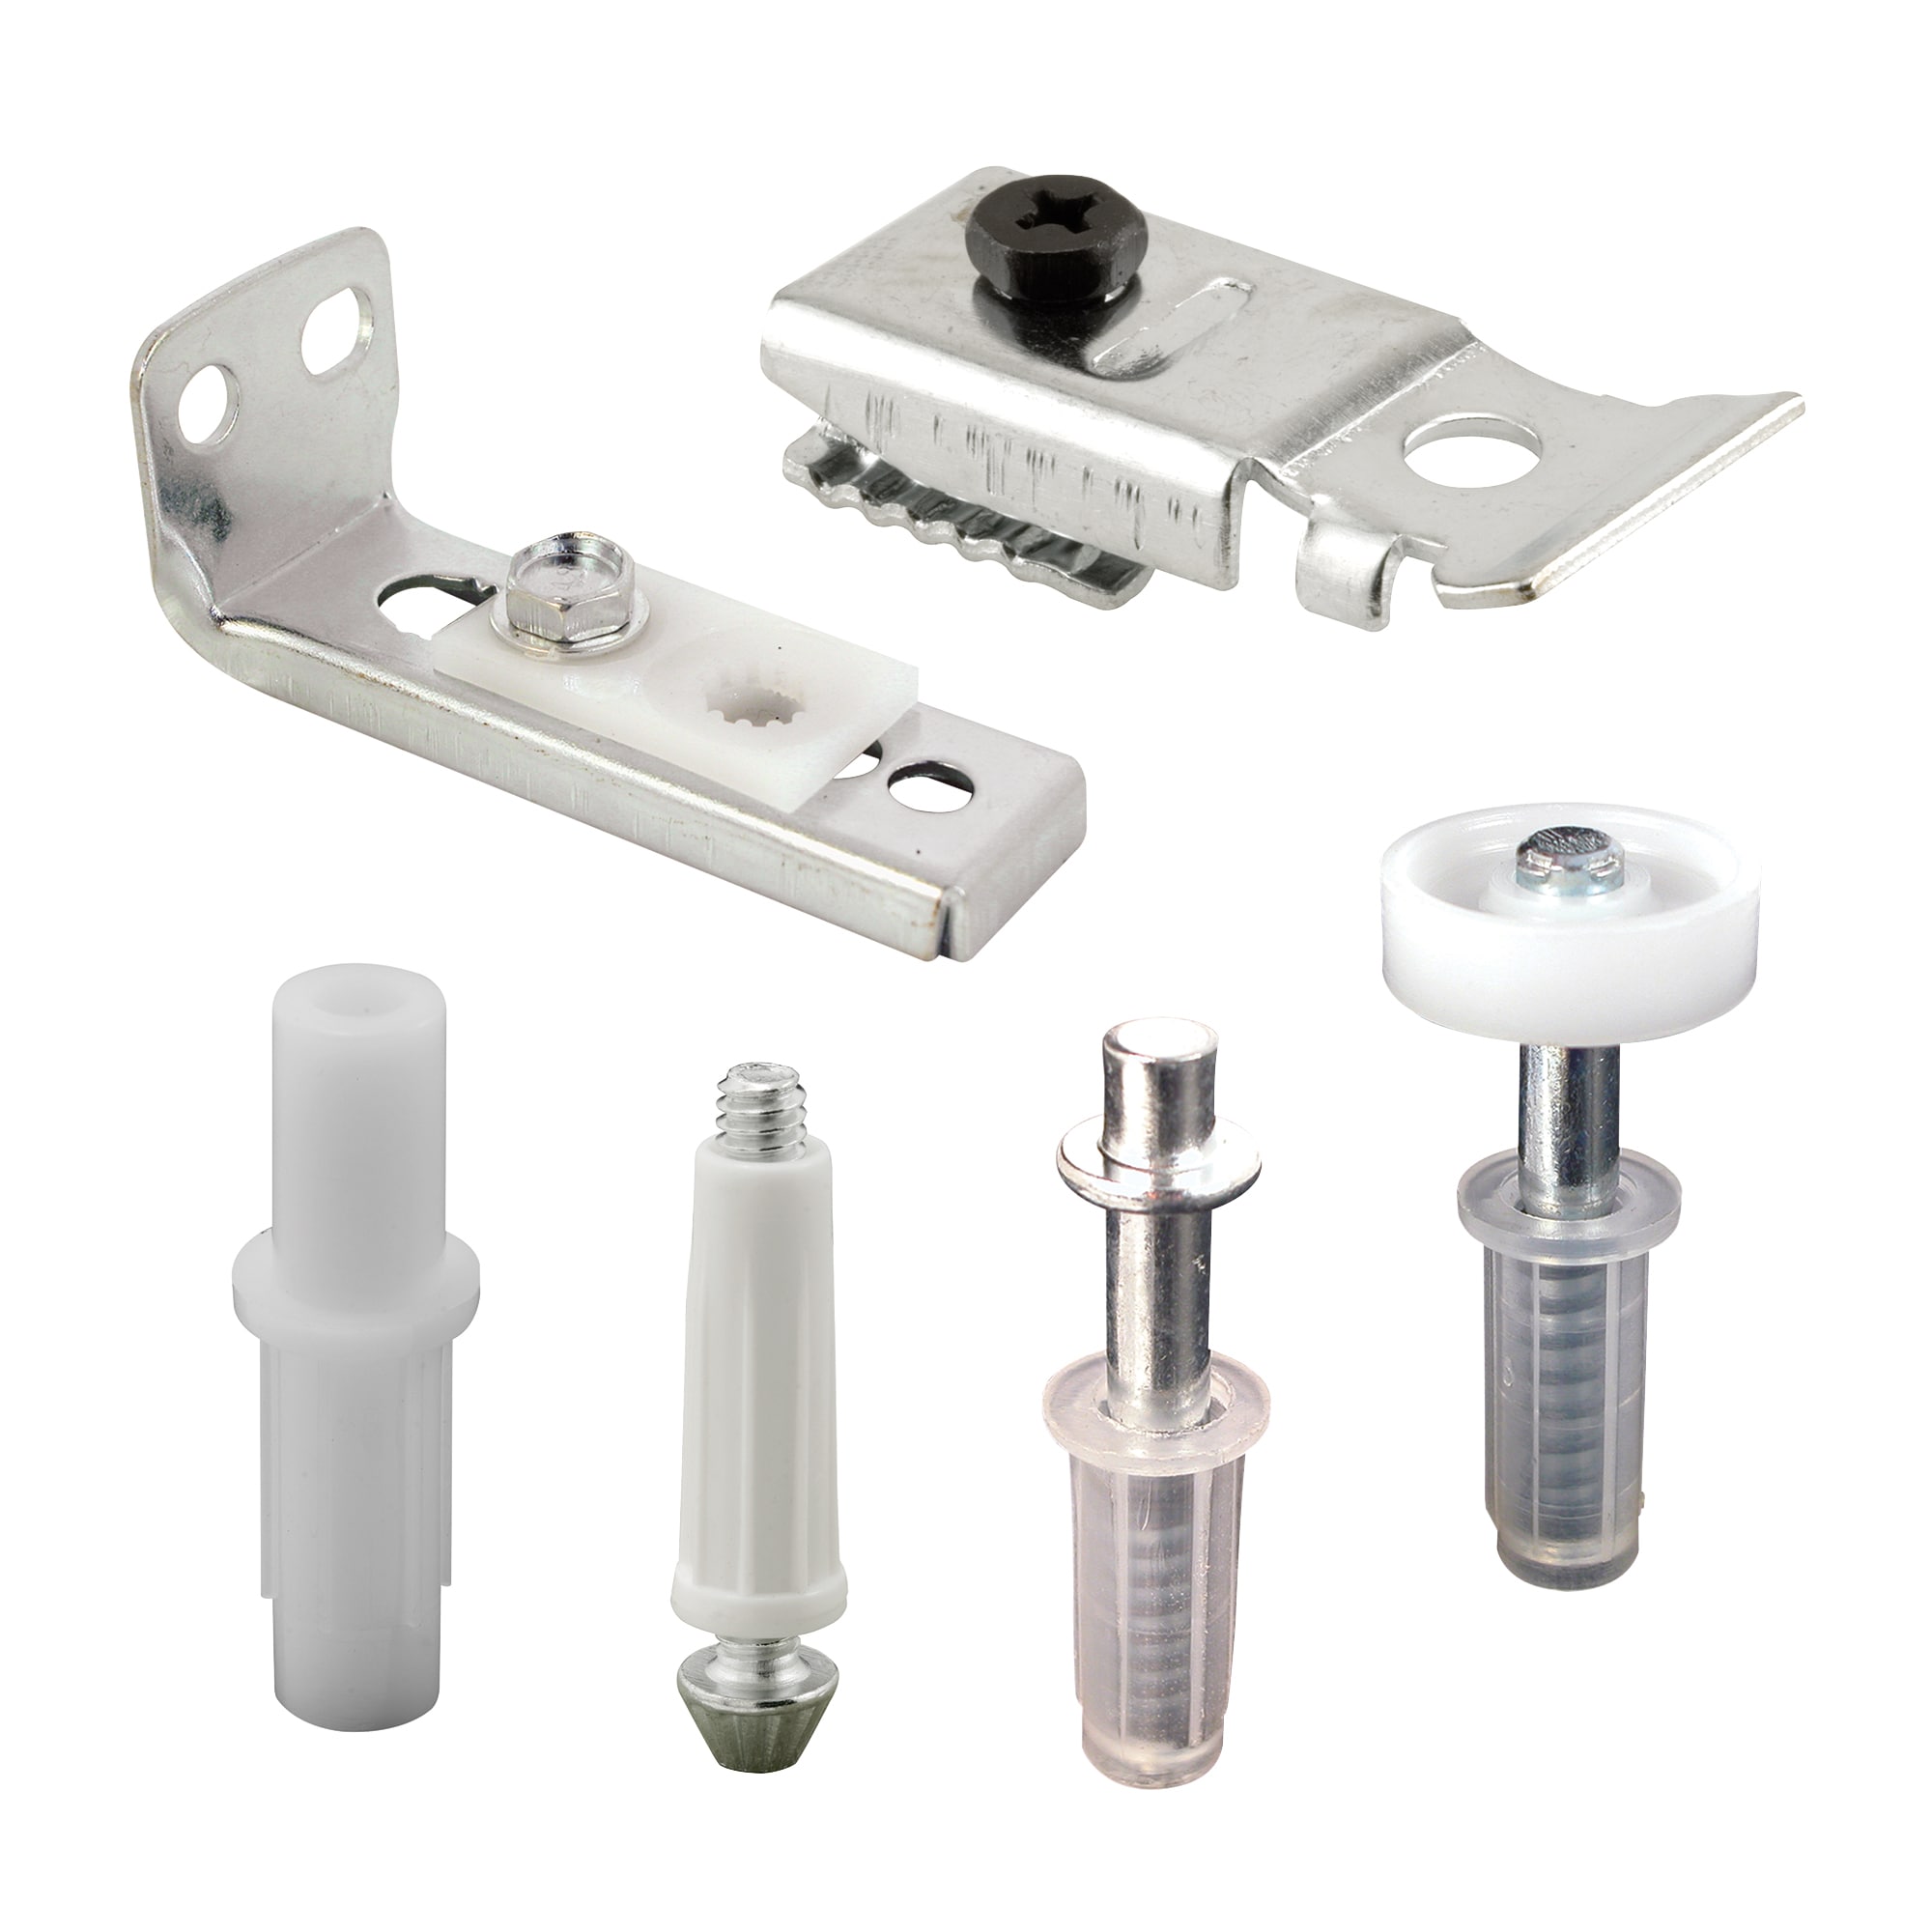 Bifold Door Hardware Repair Kit - 2 Pack Bi-fold Sliding Closet Doors Replacement  Parts Include Top